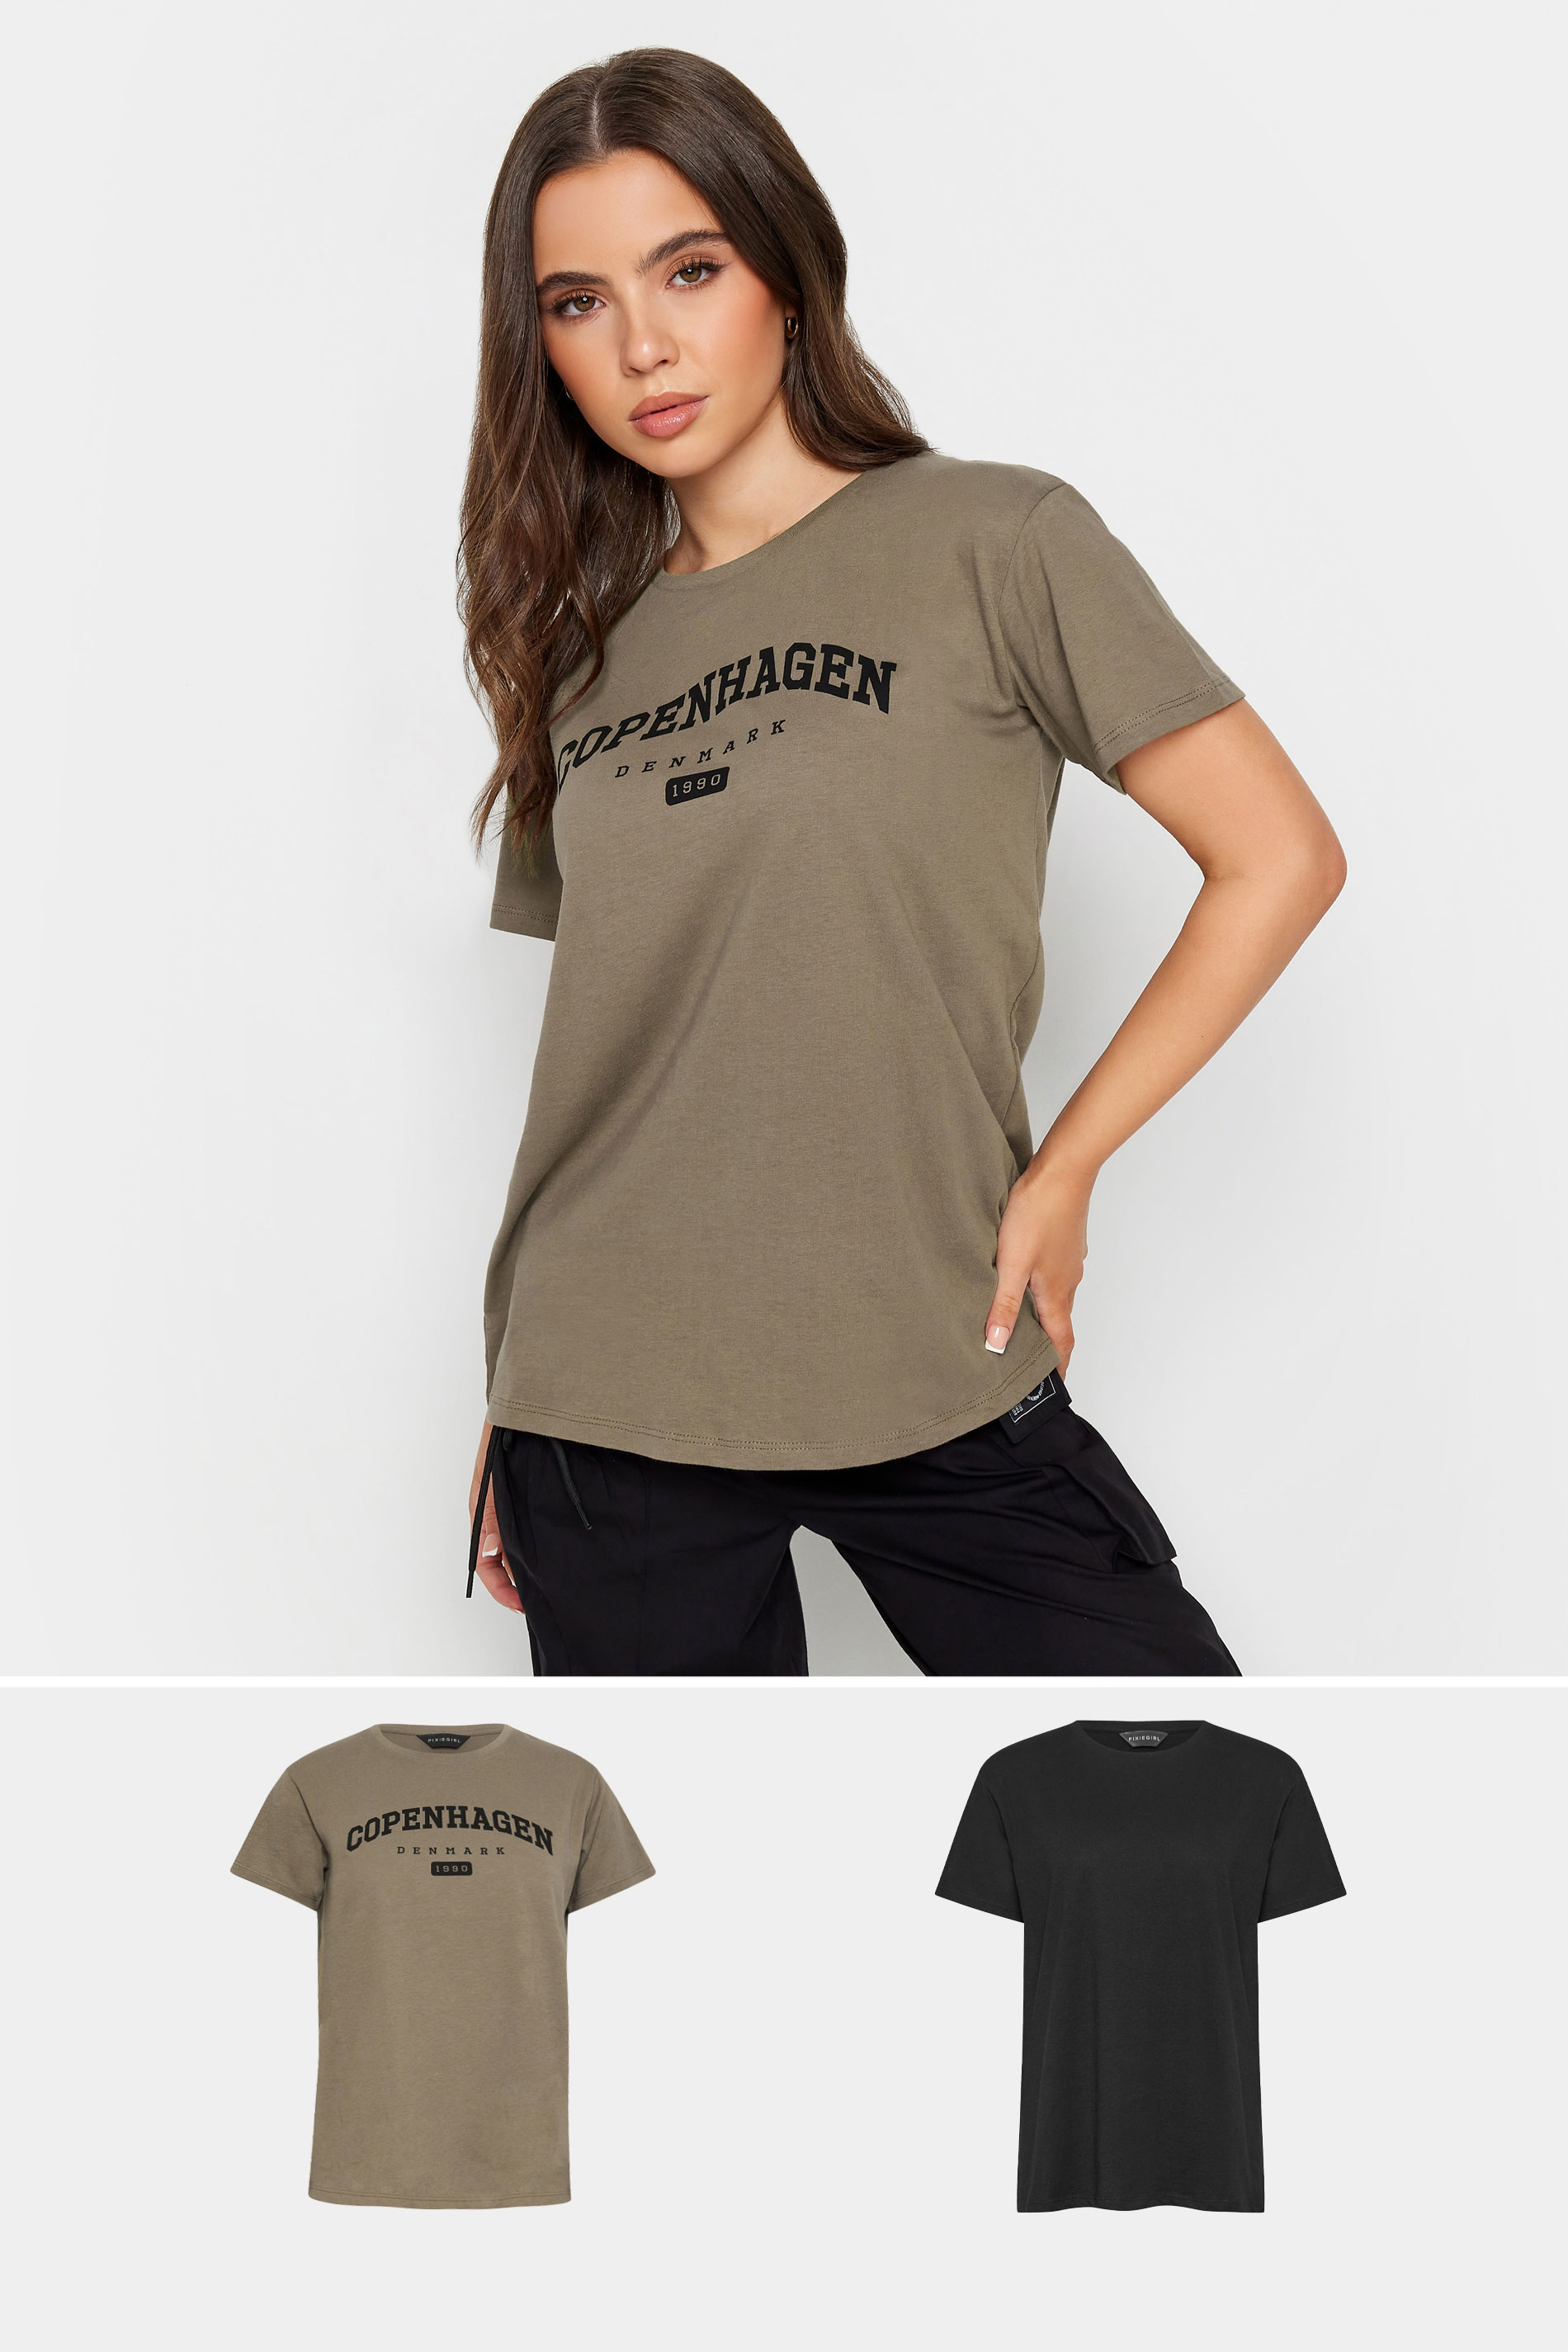 Pixiegirl 2 Pack Black & Brown 'Copenhagen' Slogan Tshirts 16 Pixiegirl | Petite Women's T-Shirts product